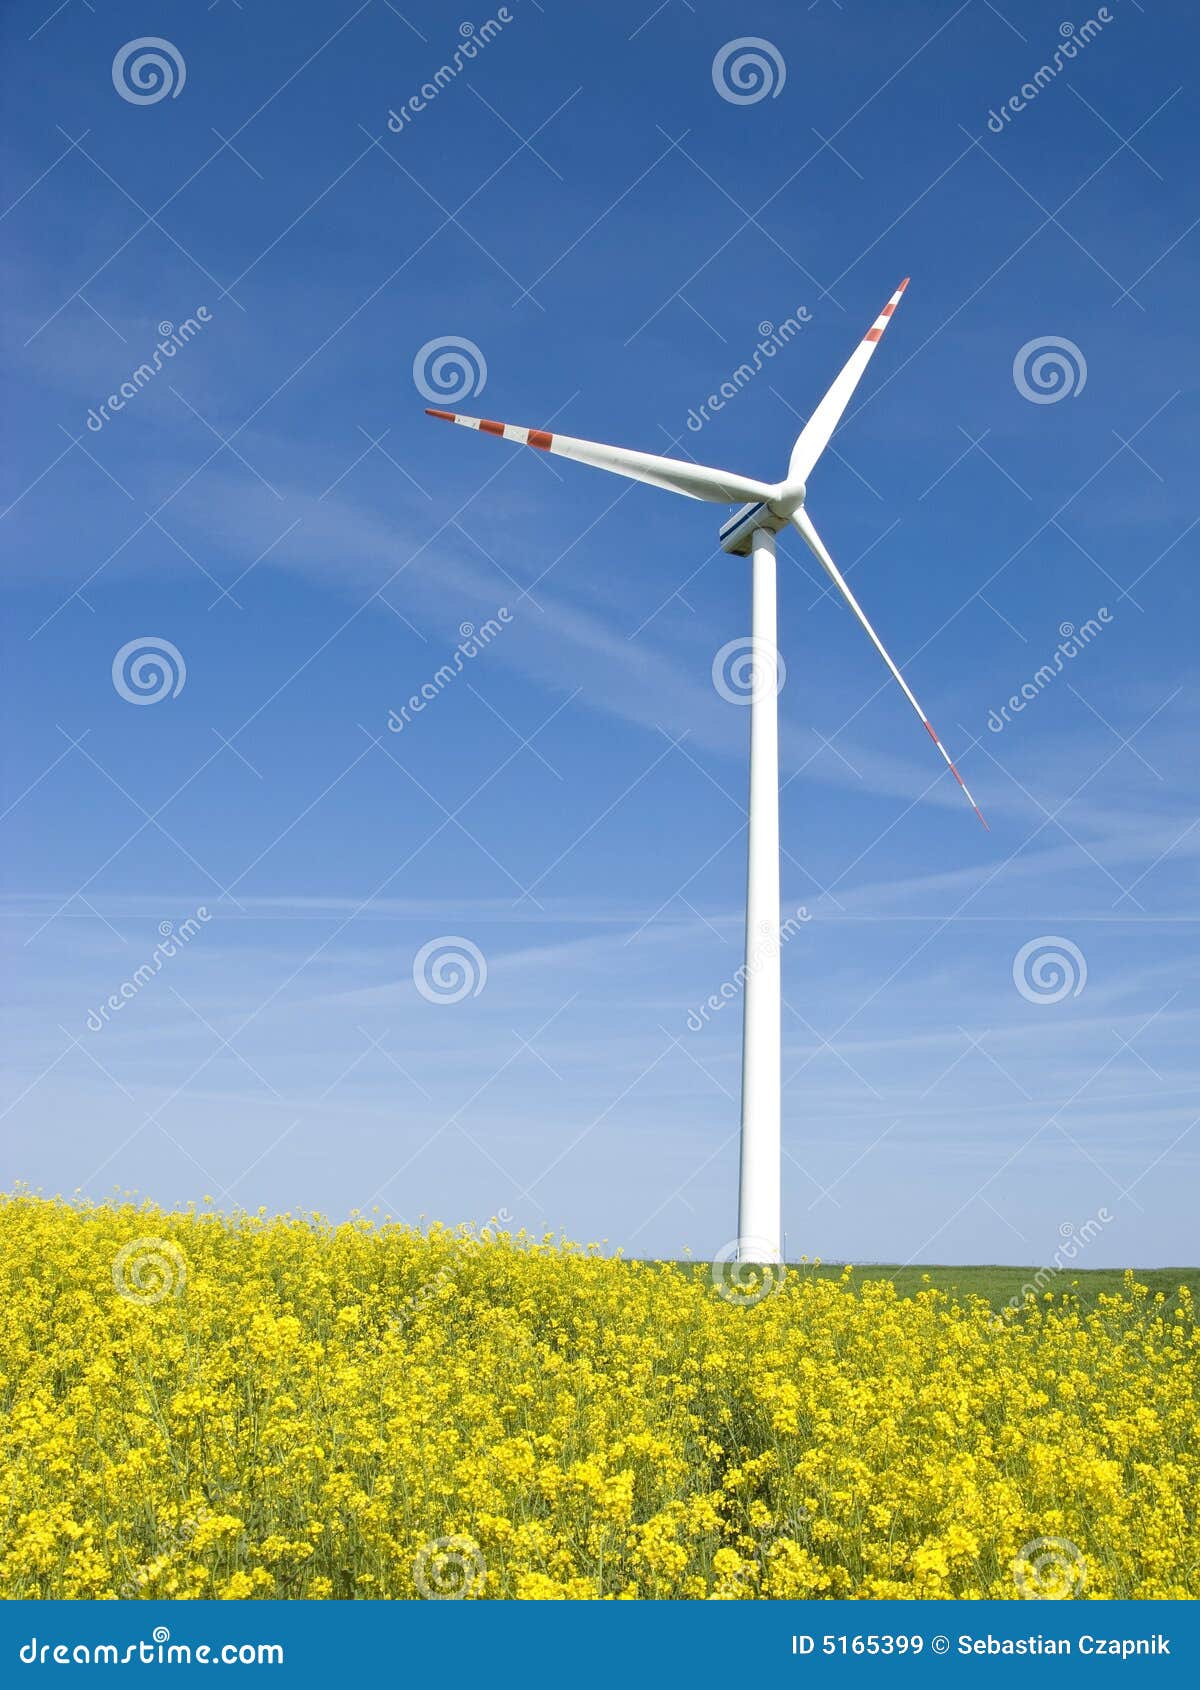 windmill in yellow field